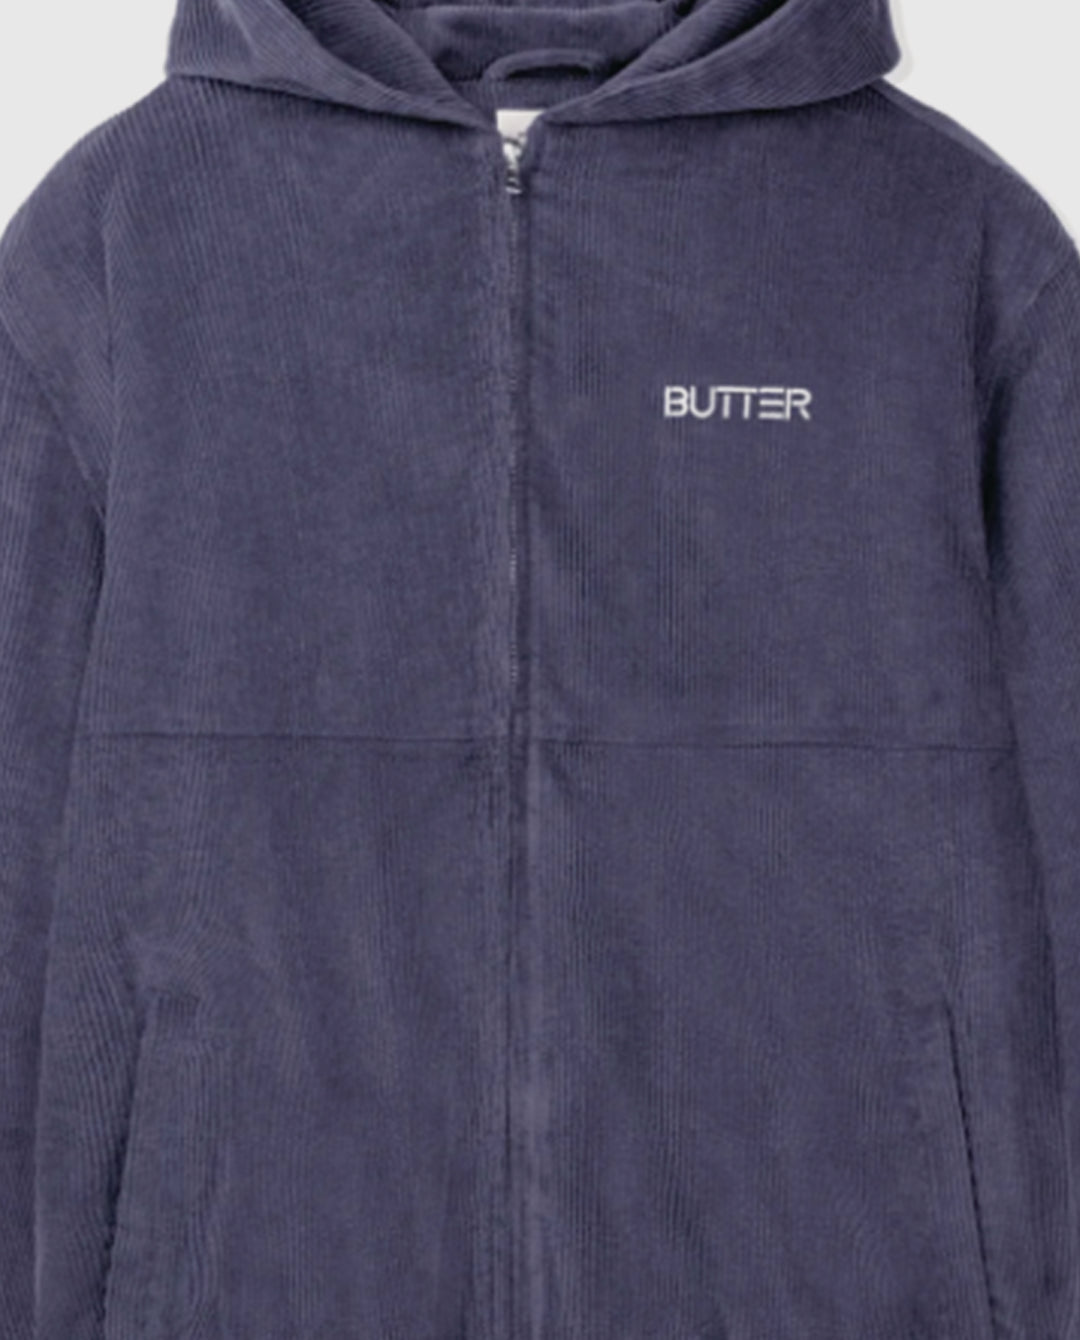 Butter Goods - Corduroy Work Jacket - Slate